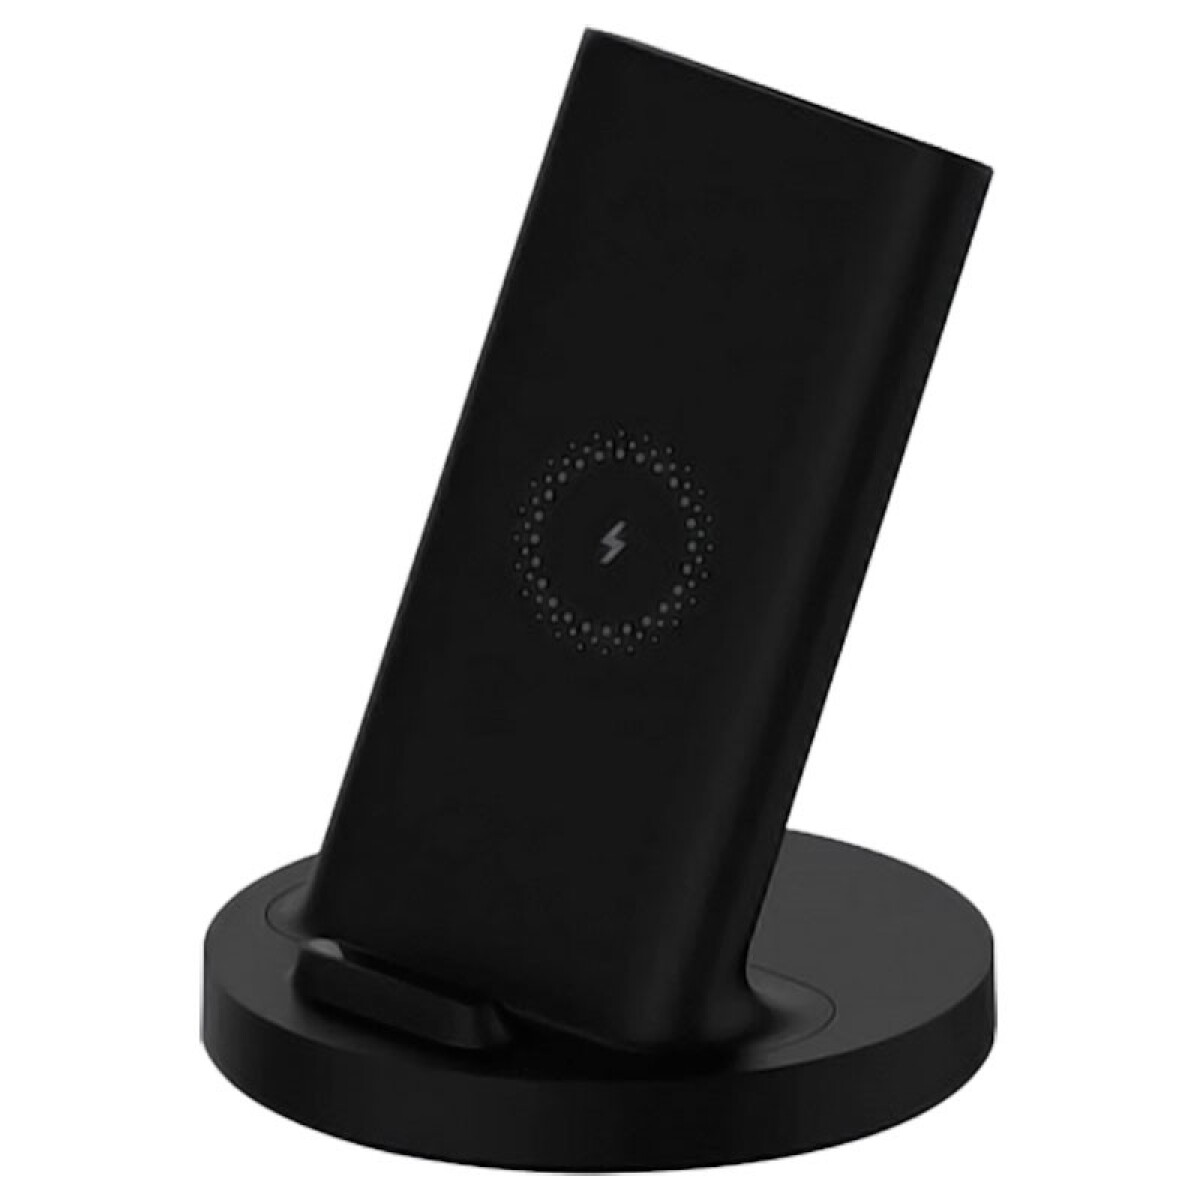 Cargador inalambrico mi 20w wireless charging stand - Black 